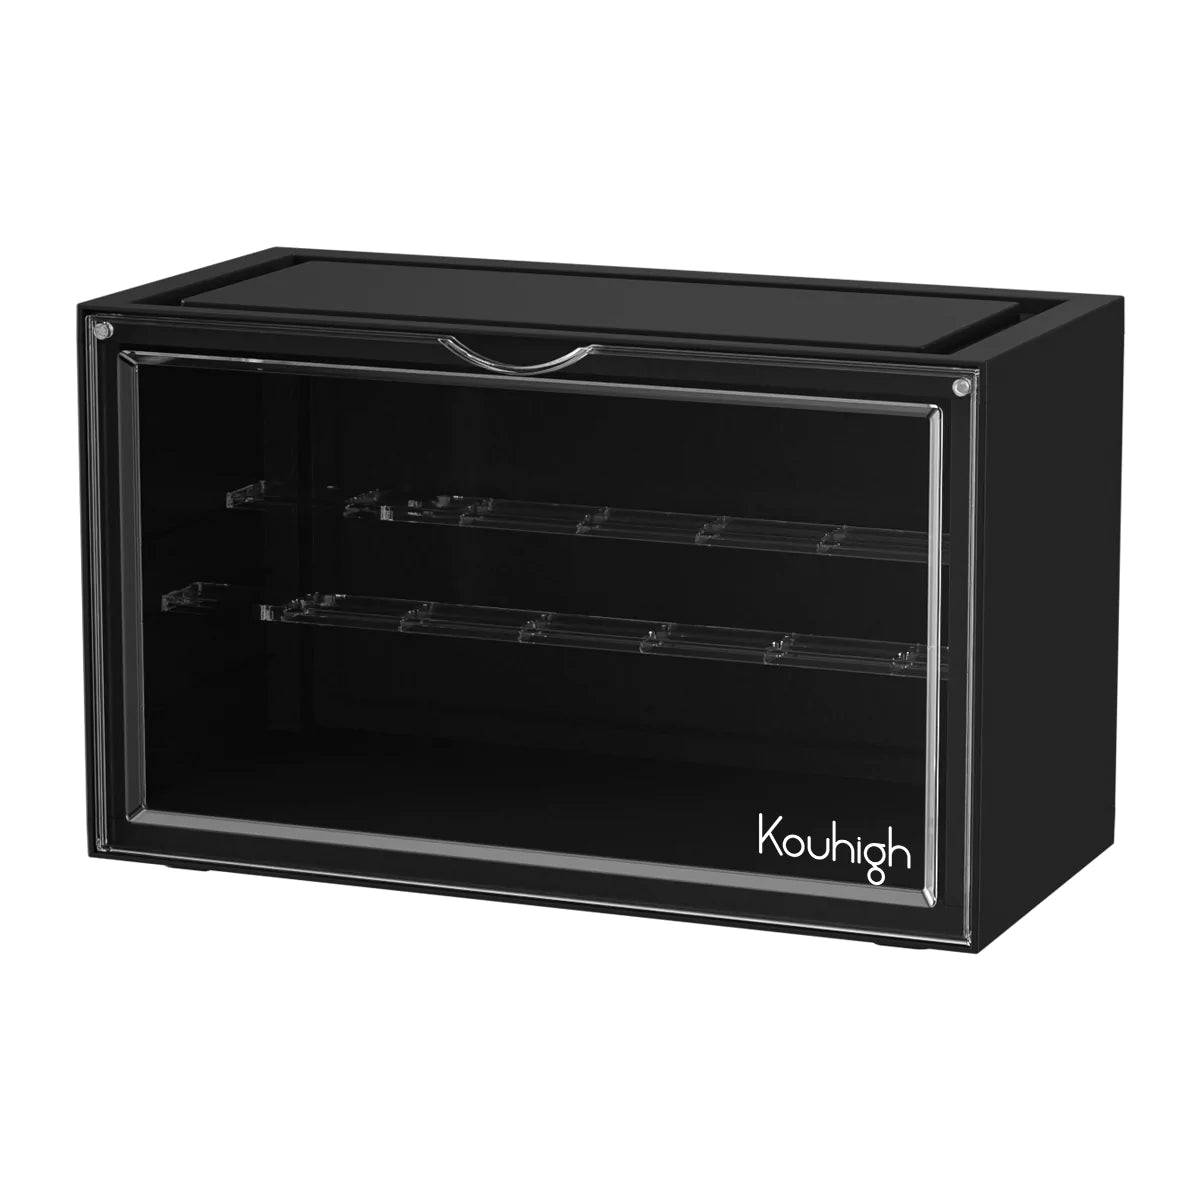 Kouhigh Diverse Color Series Classic Display Box (Black)